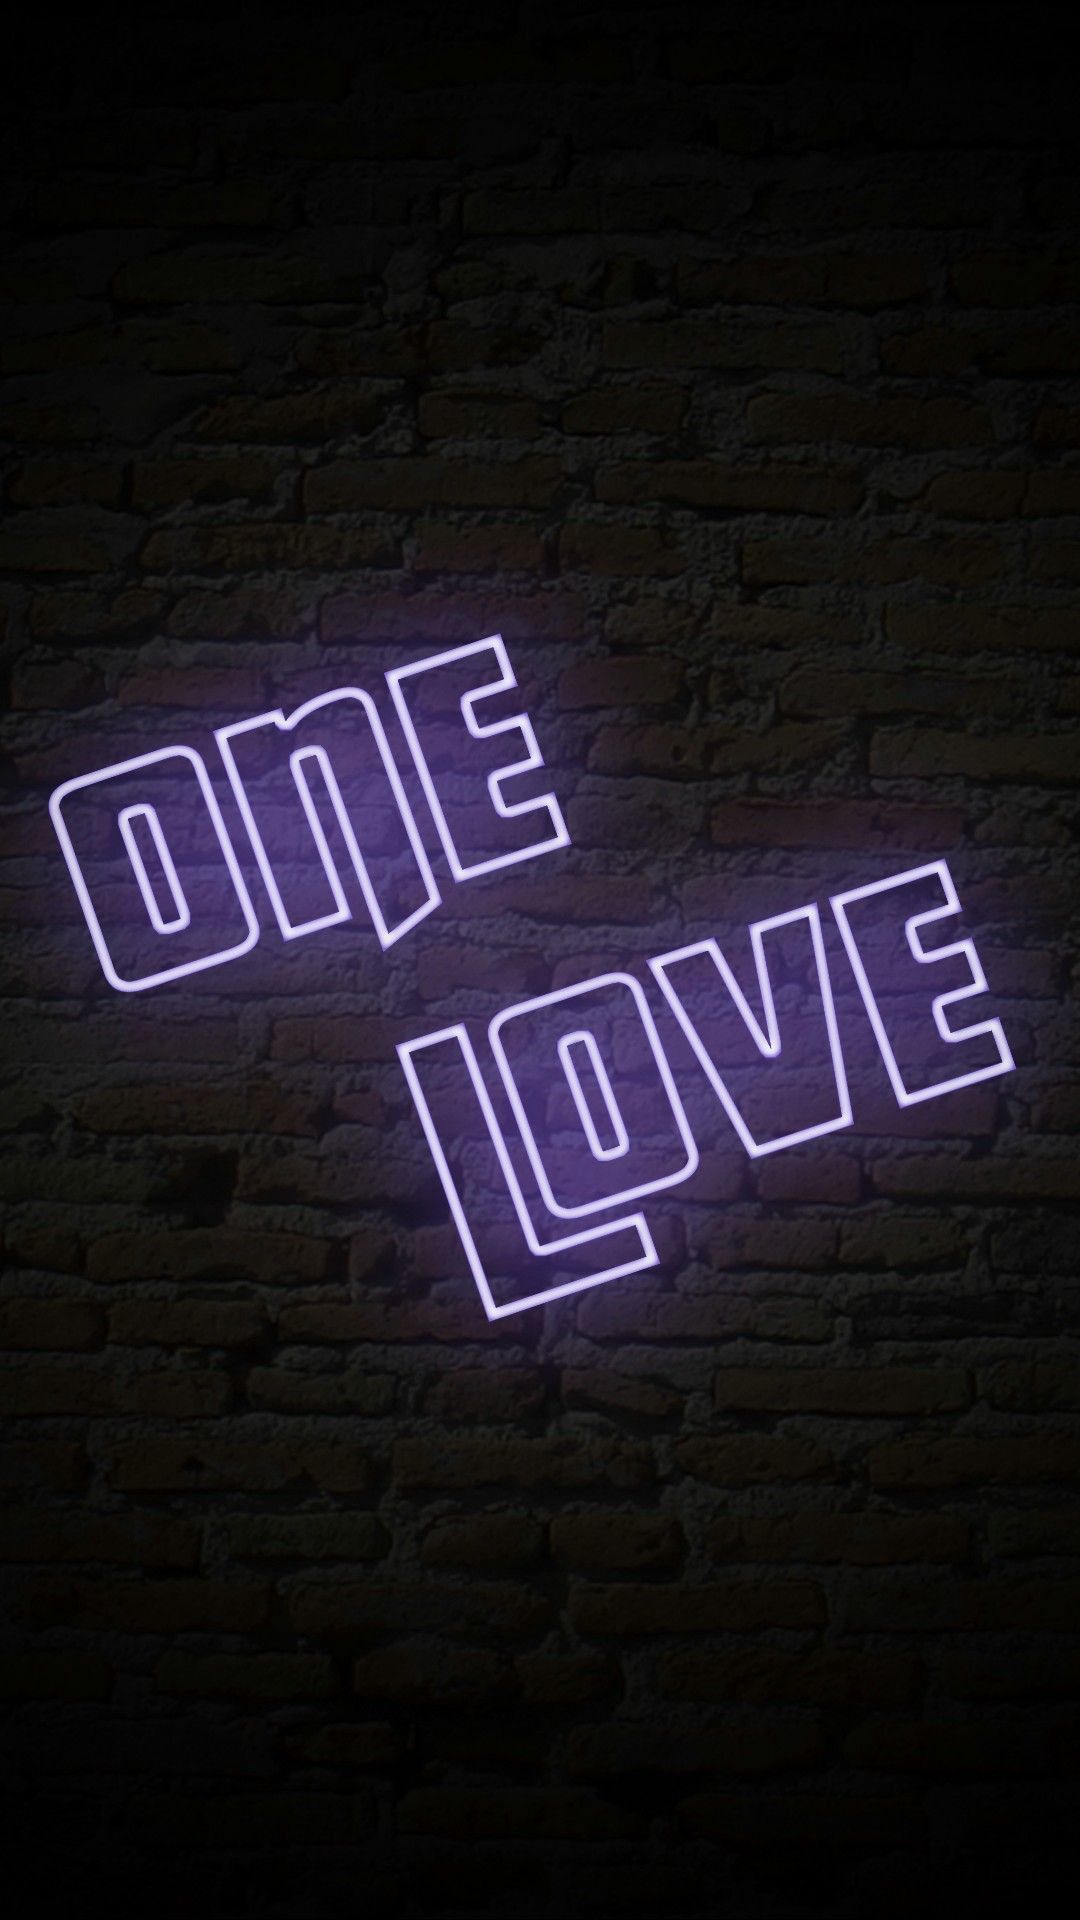 1080x1920 One love wallpaper background | Love wallpaper backgrounds, Love wallpaper, Neon signs